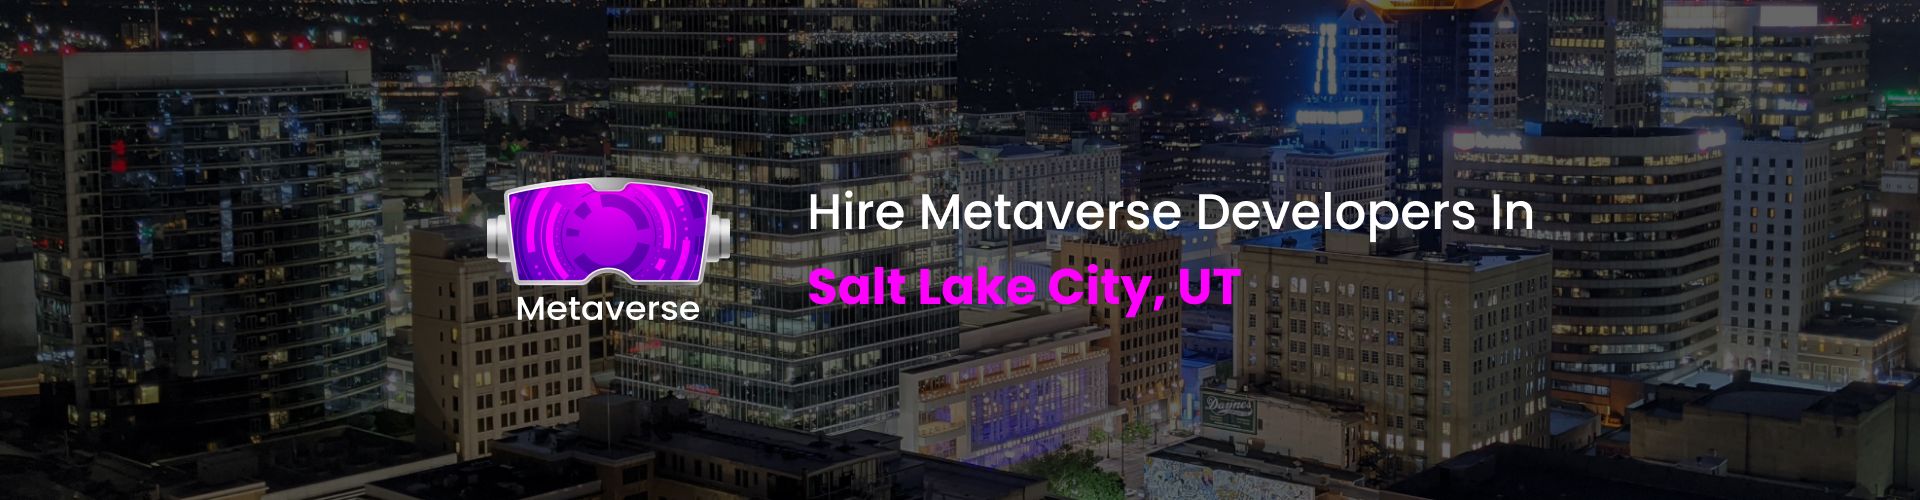 hire metaverse developers in salt lake city